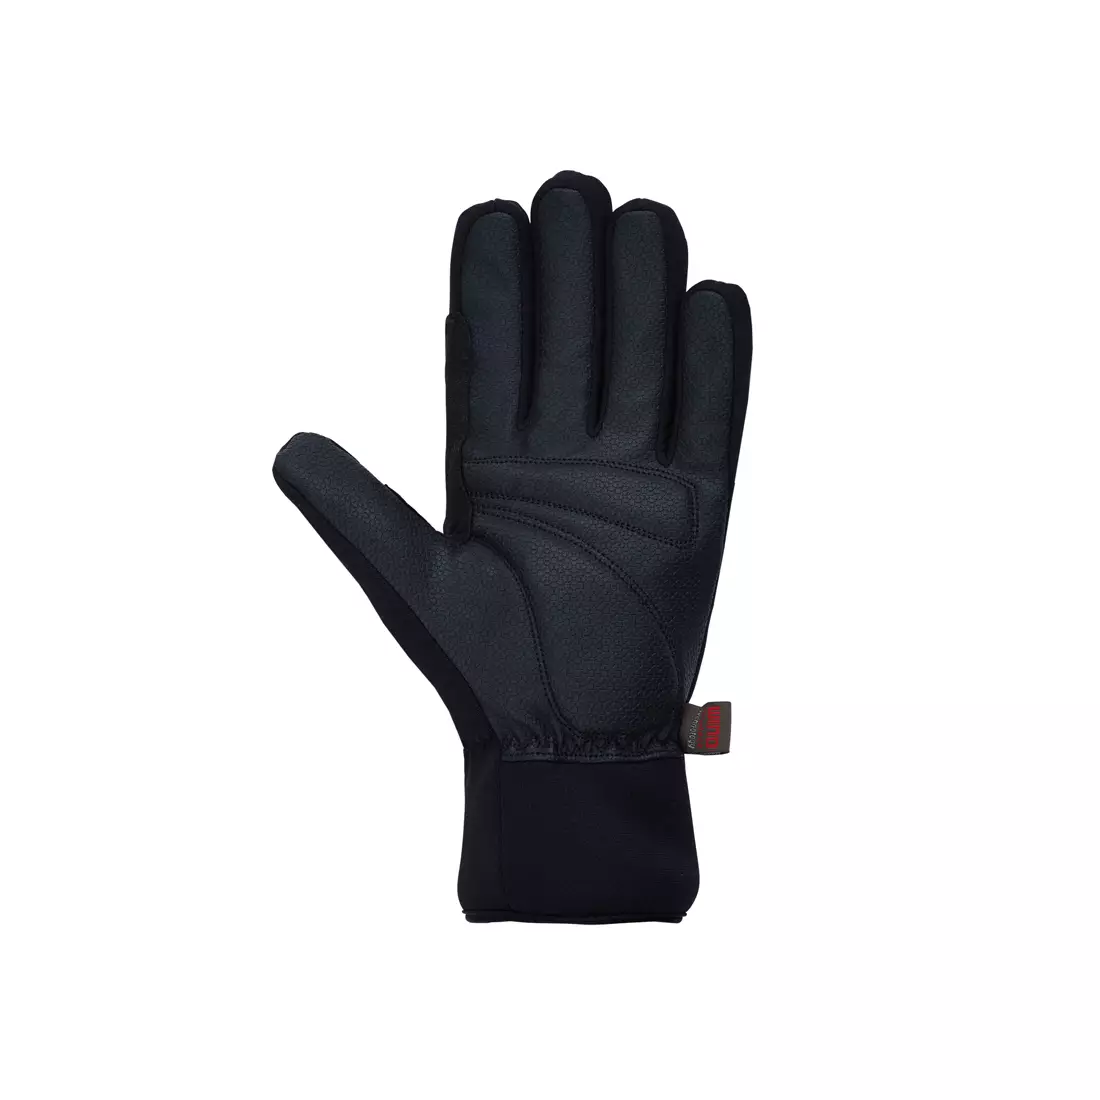 CHIBA DRY STAR SUPERLIGHT zimné cyklistické rukavice, čierna 31217